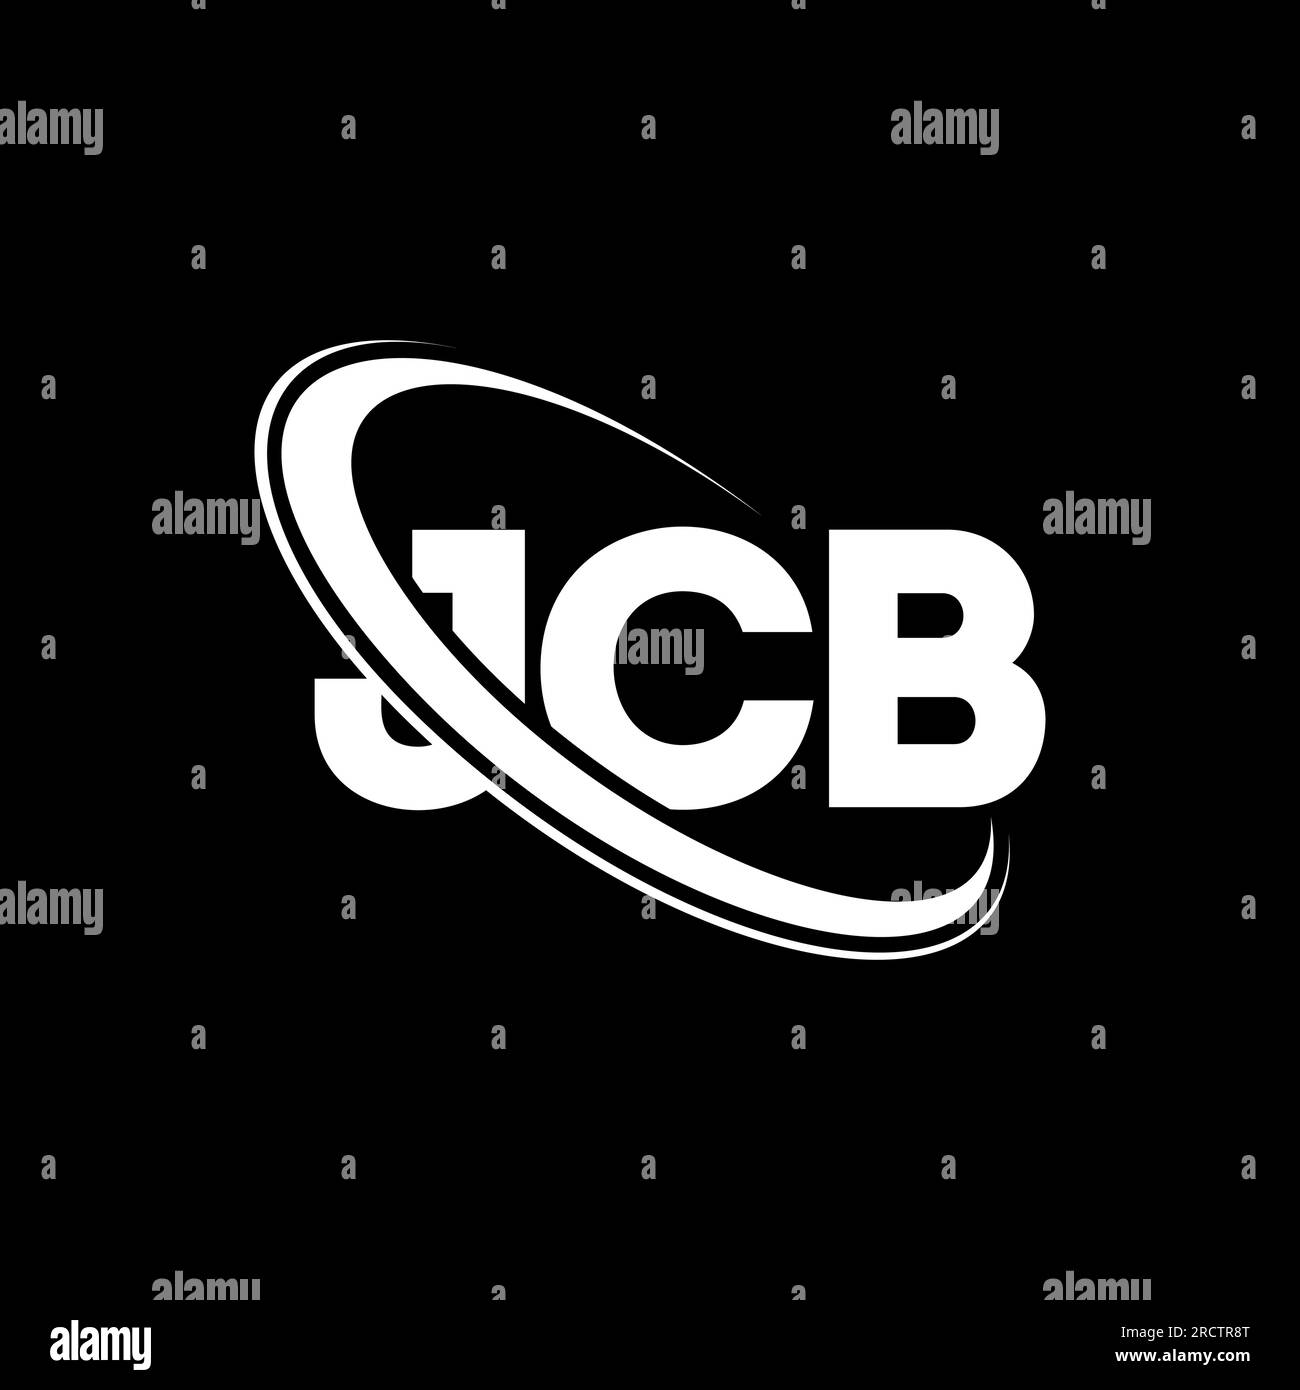 JCB Circle Letter Logo Design with Circle and Ellipse Shape. JCB